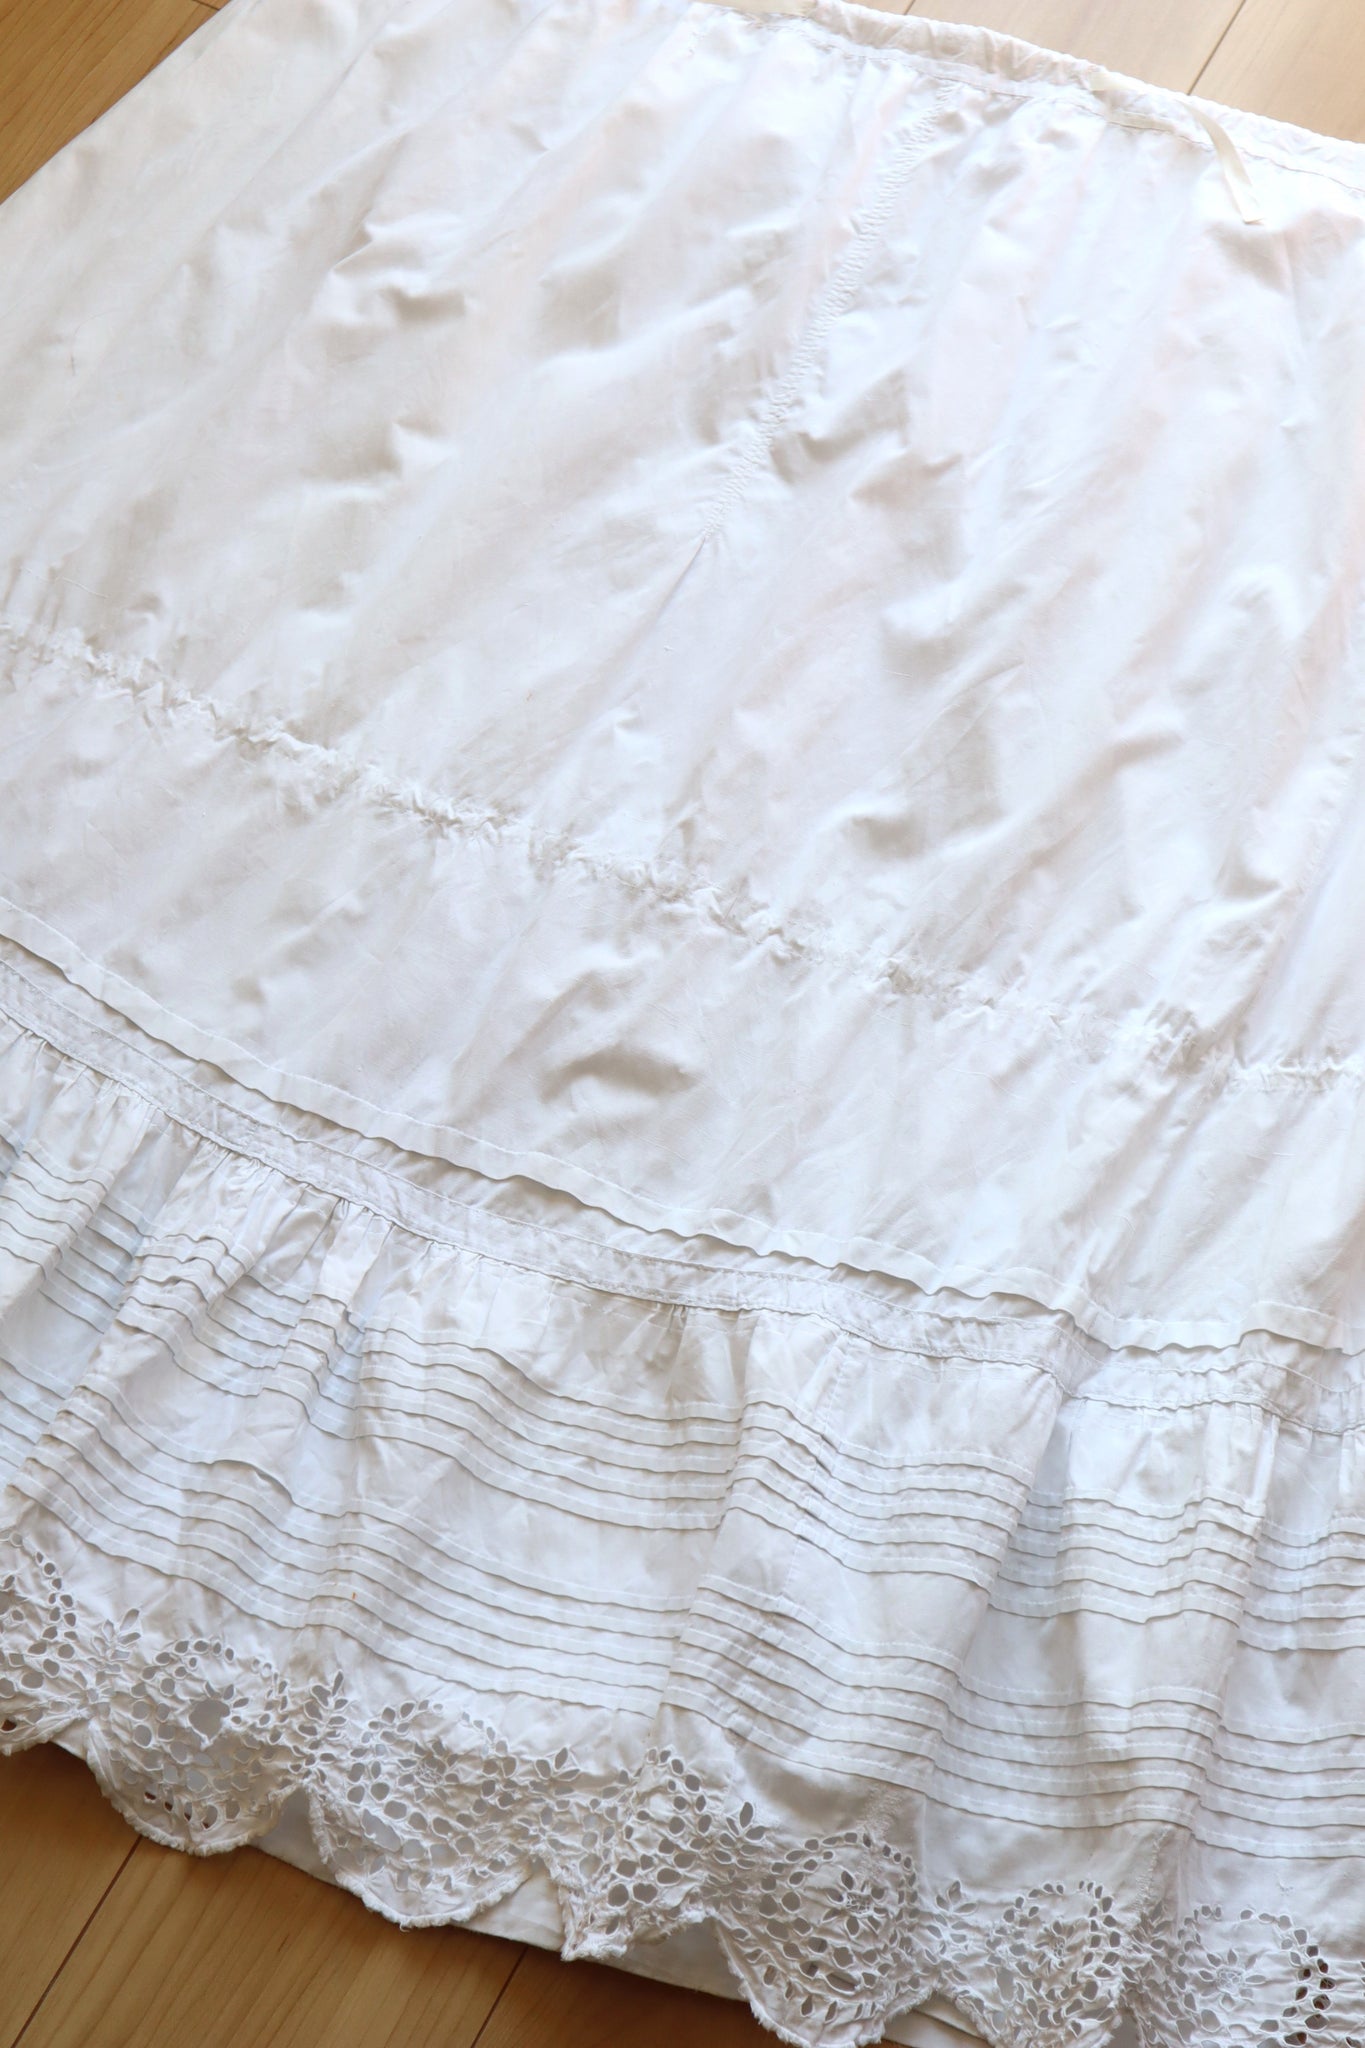 1900s Cut Work Bustle Petticoat Skirt